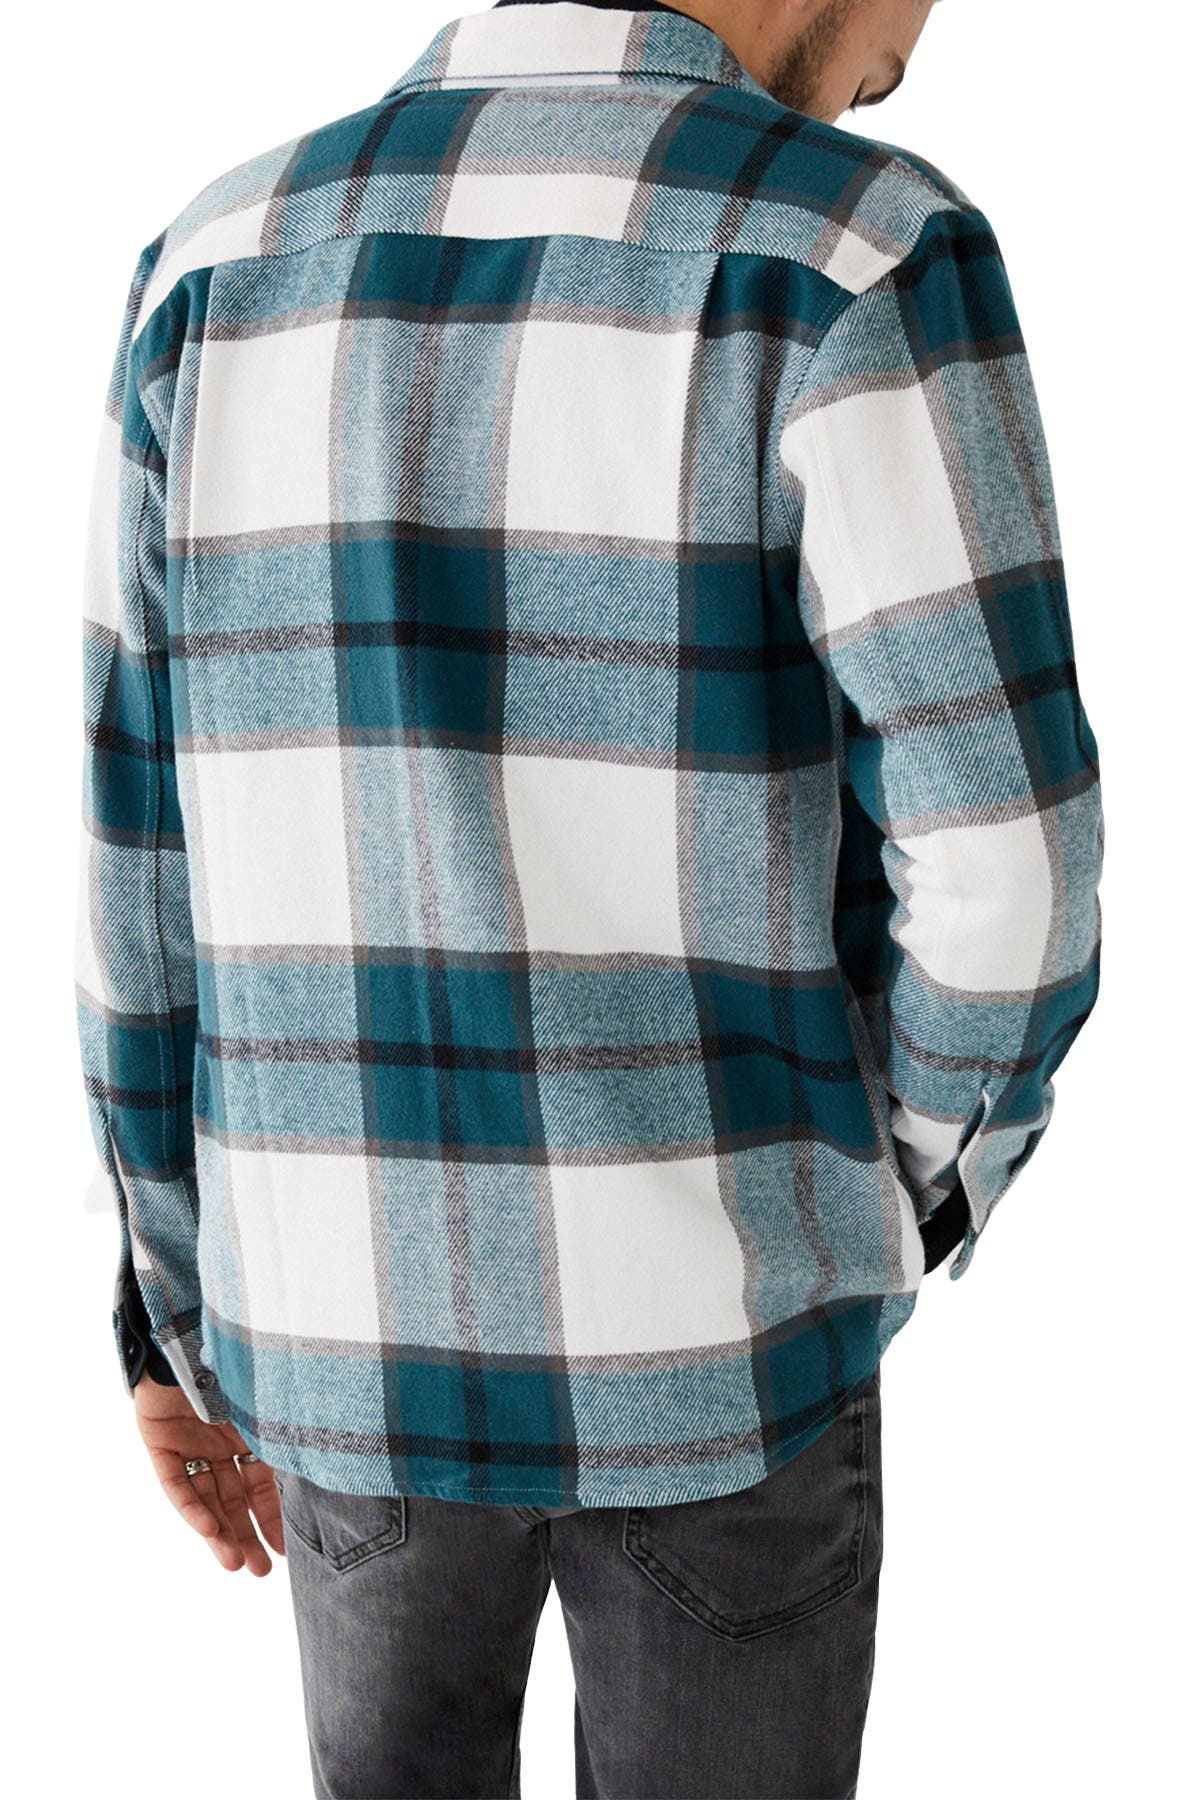 true religion flannel shirt